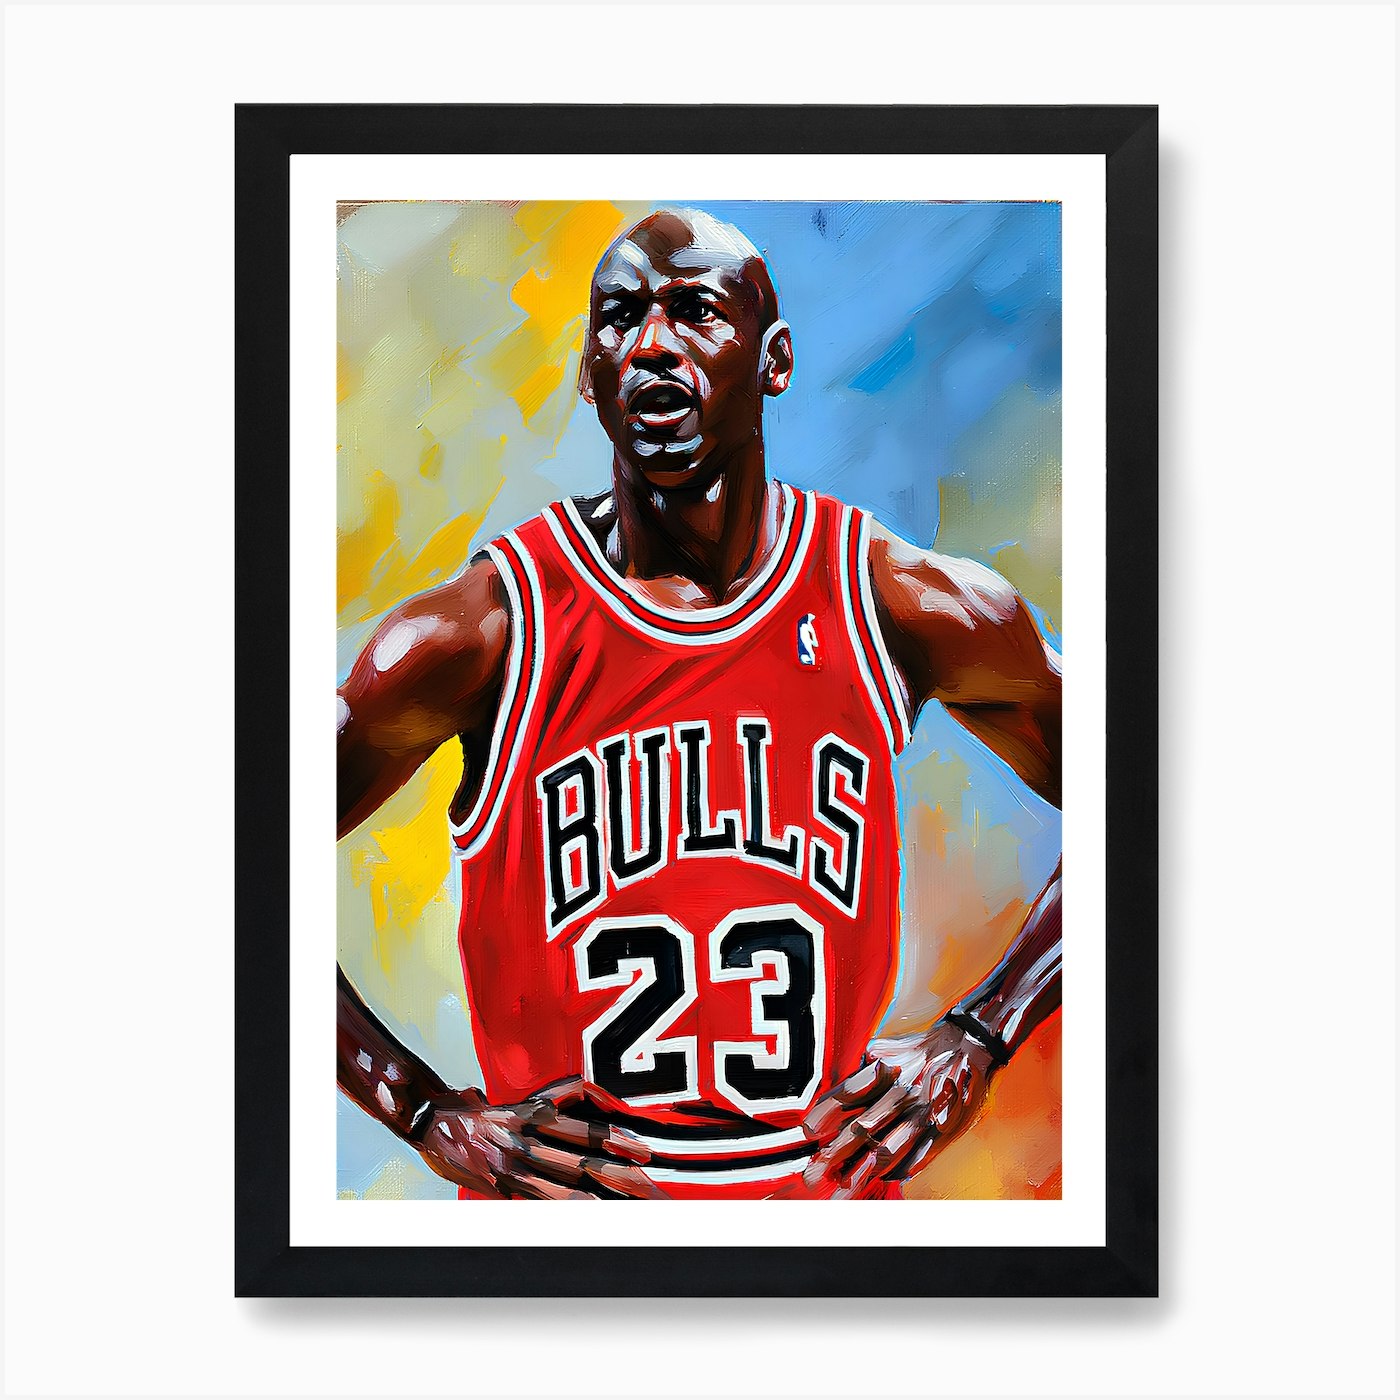 Michael Jordan & Kobe Bryant fine art limited edition painting